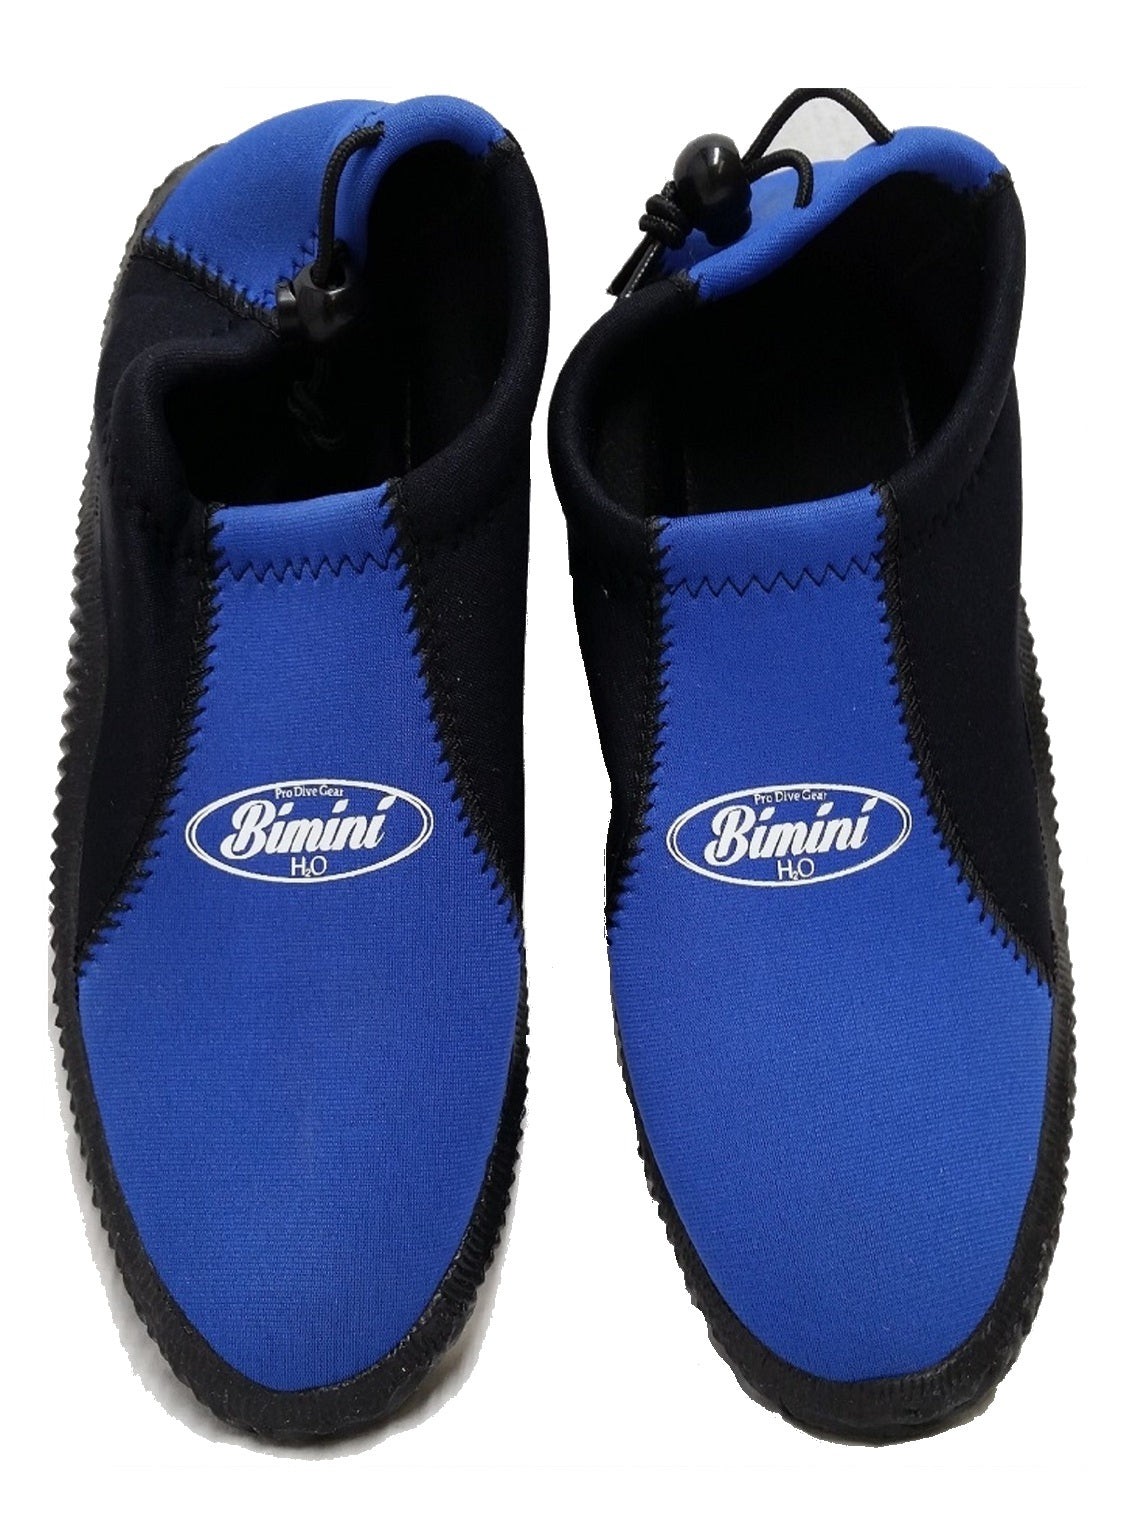 Bimini H2O Gear Water Shoes Aqua Socks Black Blue Size 7